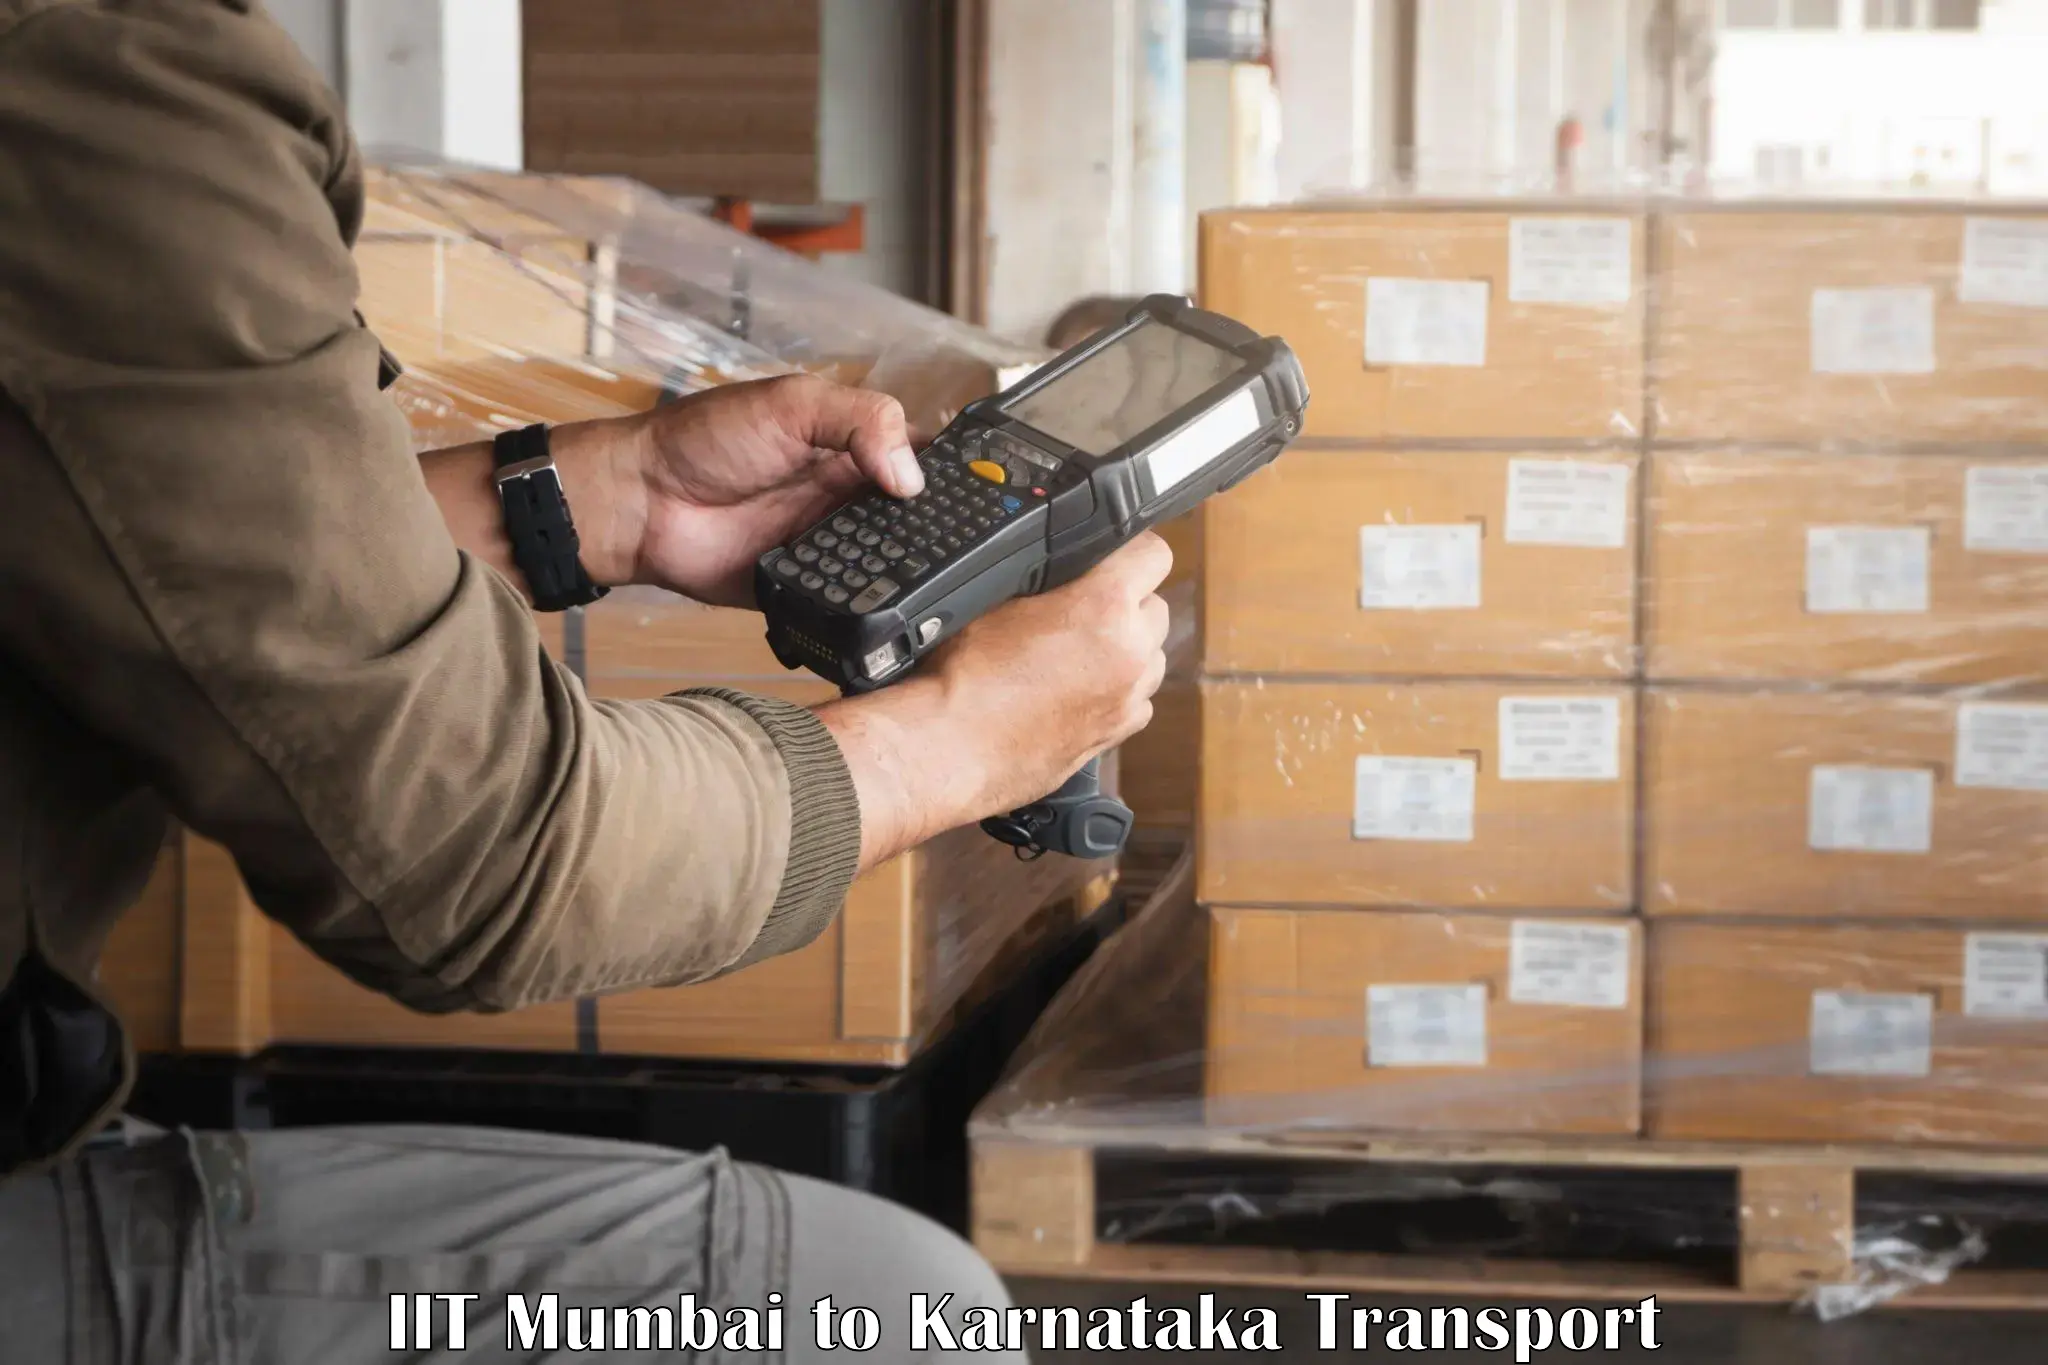 Container transportation services IIT Mumbai to Mundgod